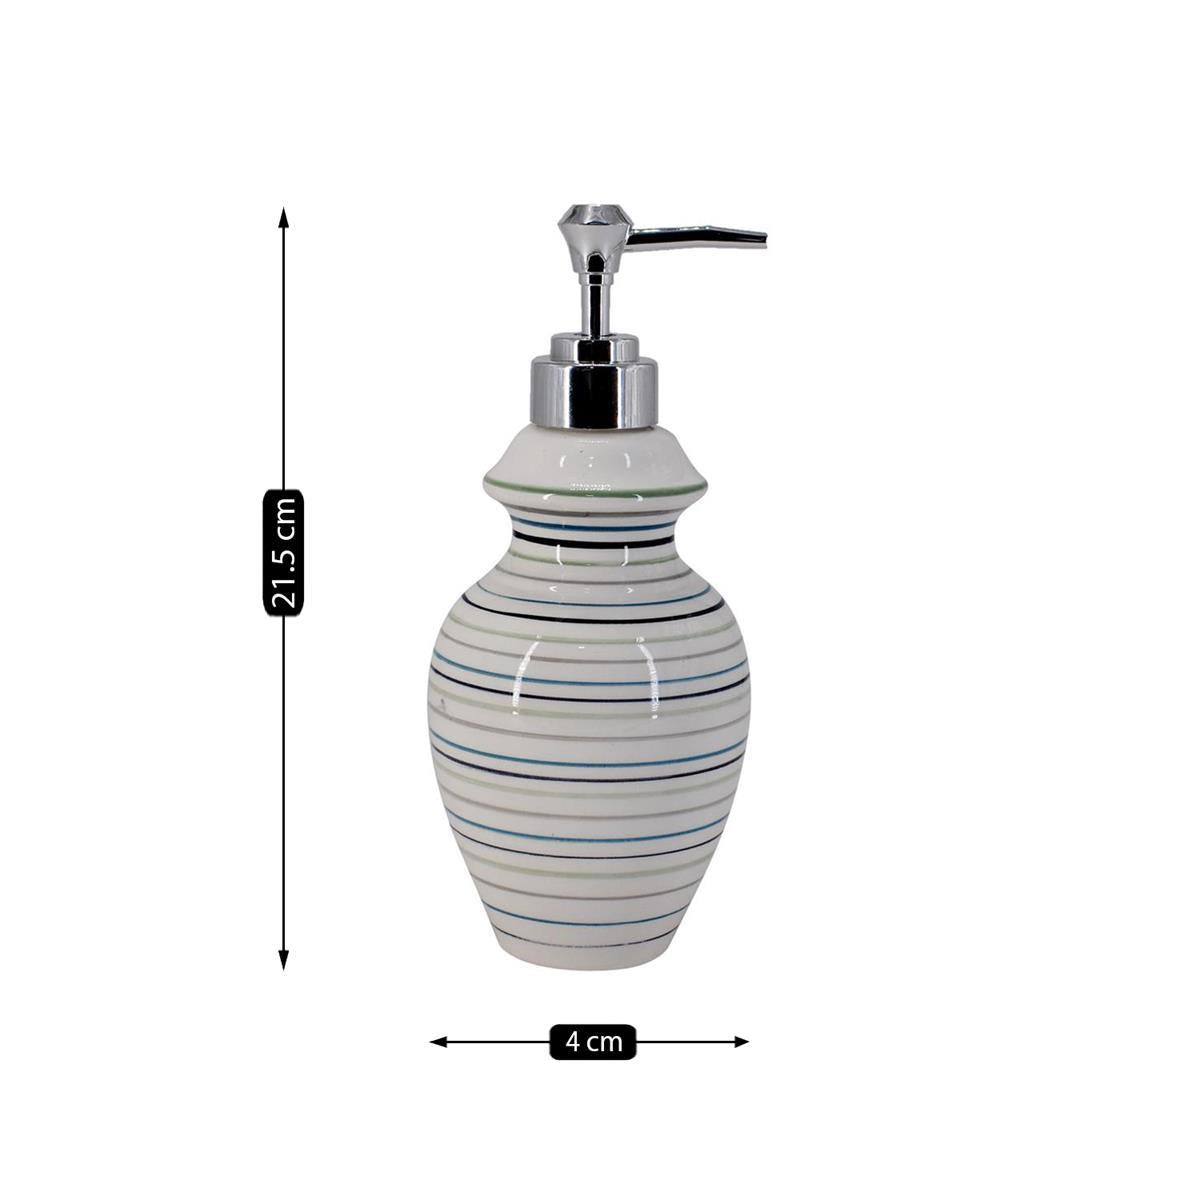 Ceramic Soap Dispenser handwash Pump for Bathroom, Set of 1, White (7641)